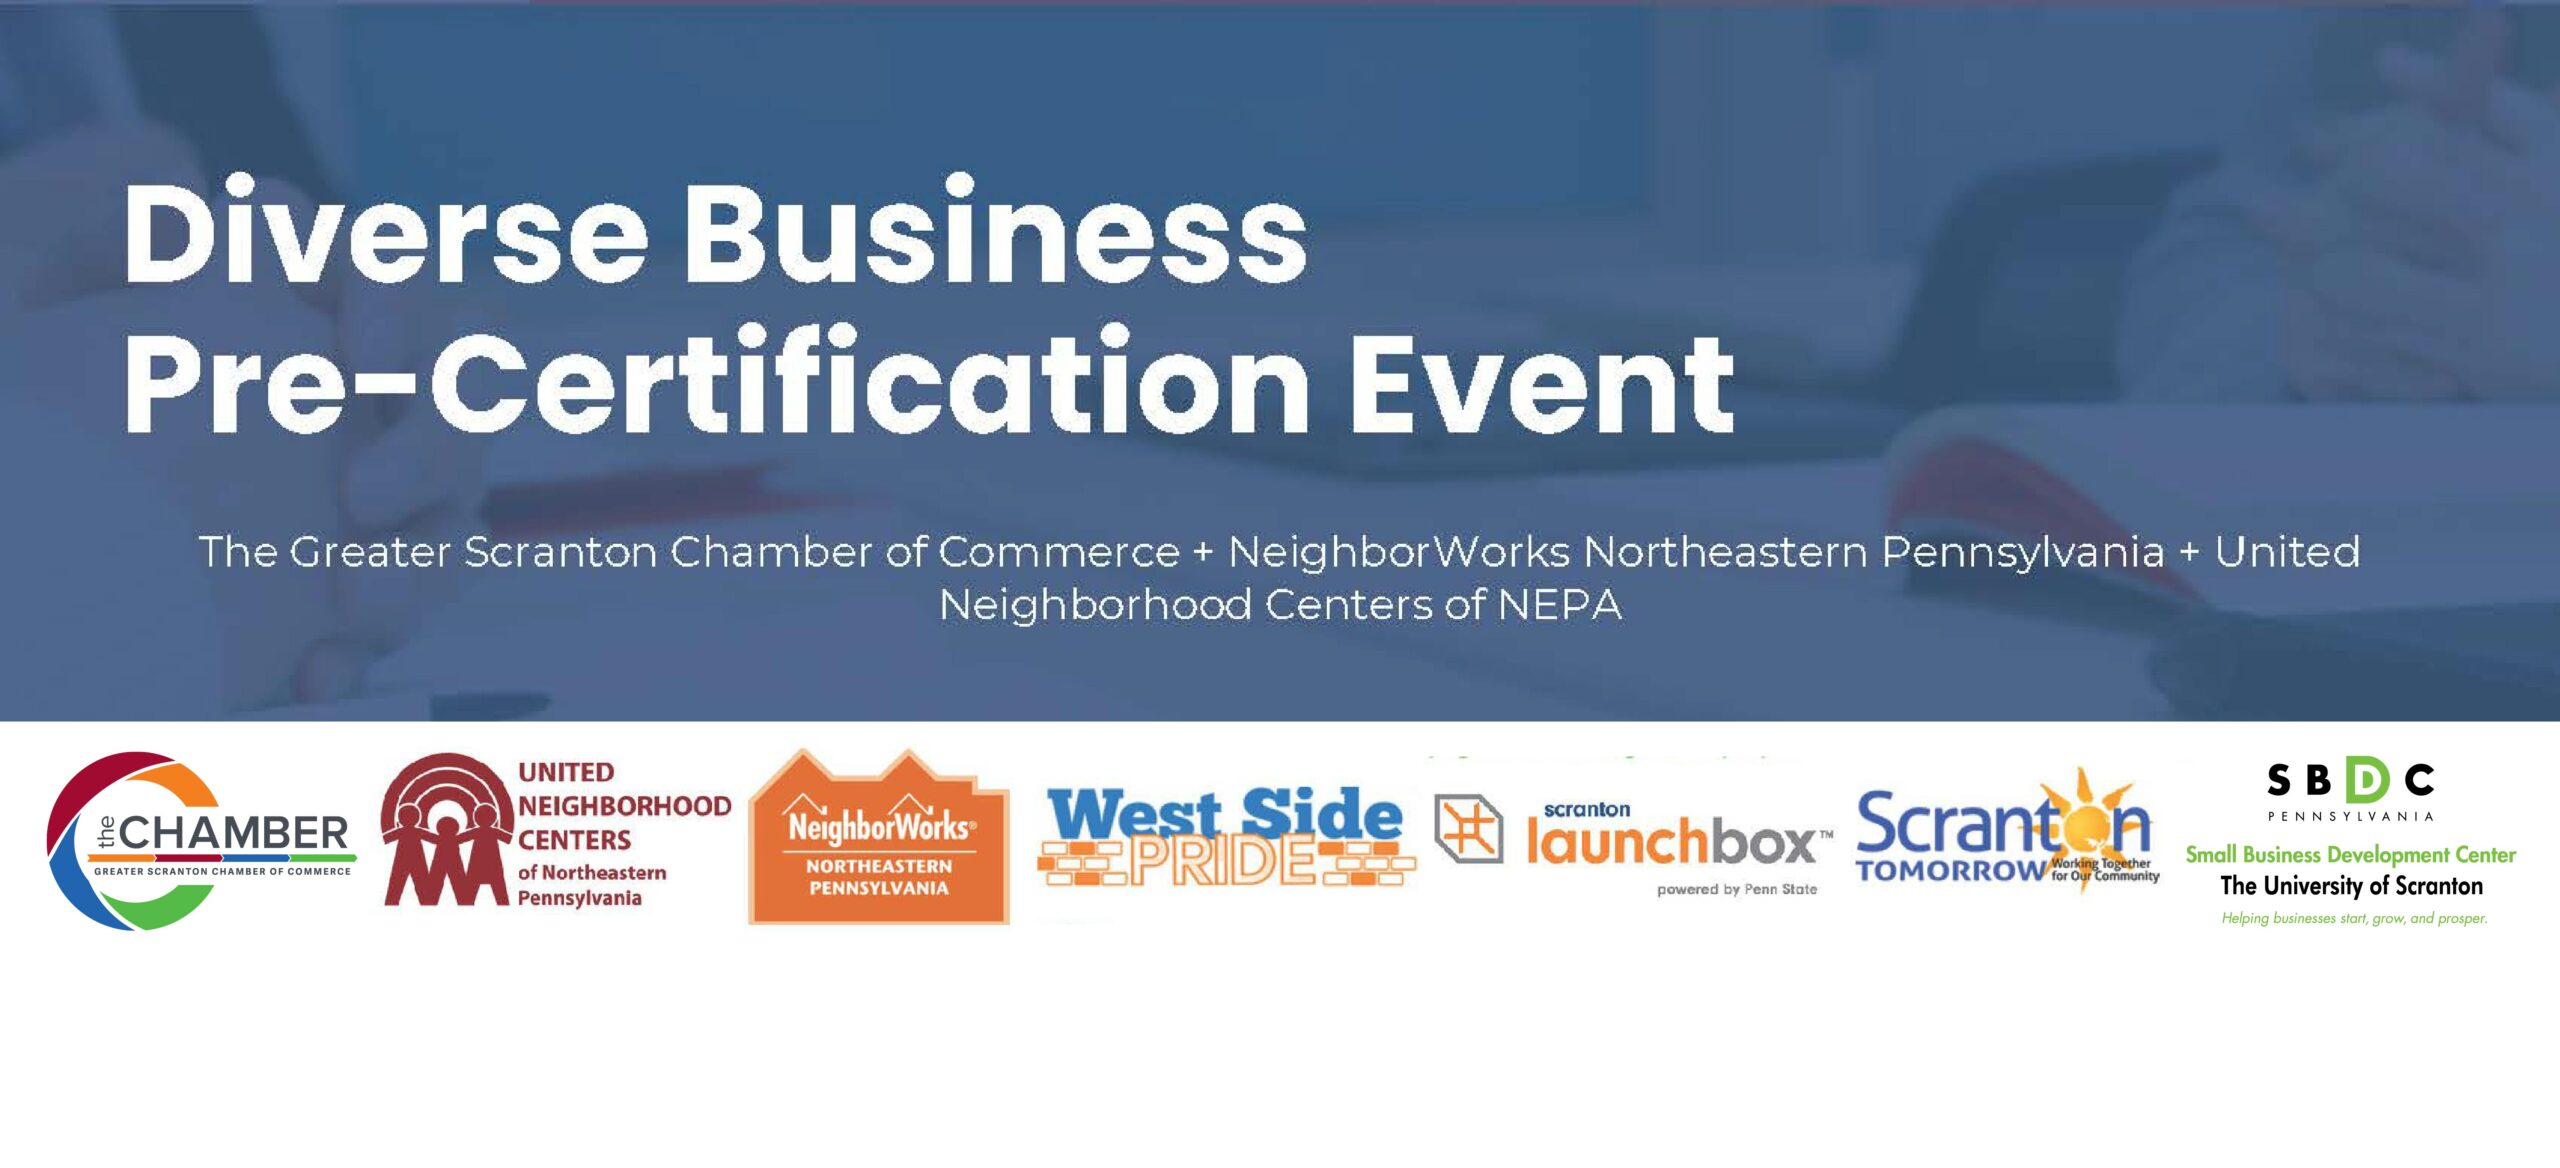 Diverse Business Pre-Certification Event